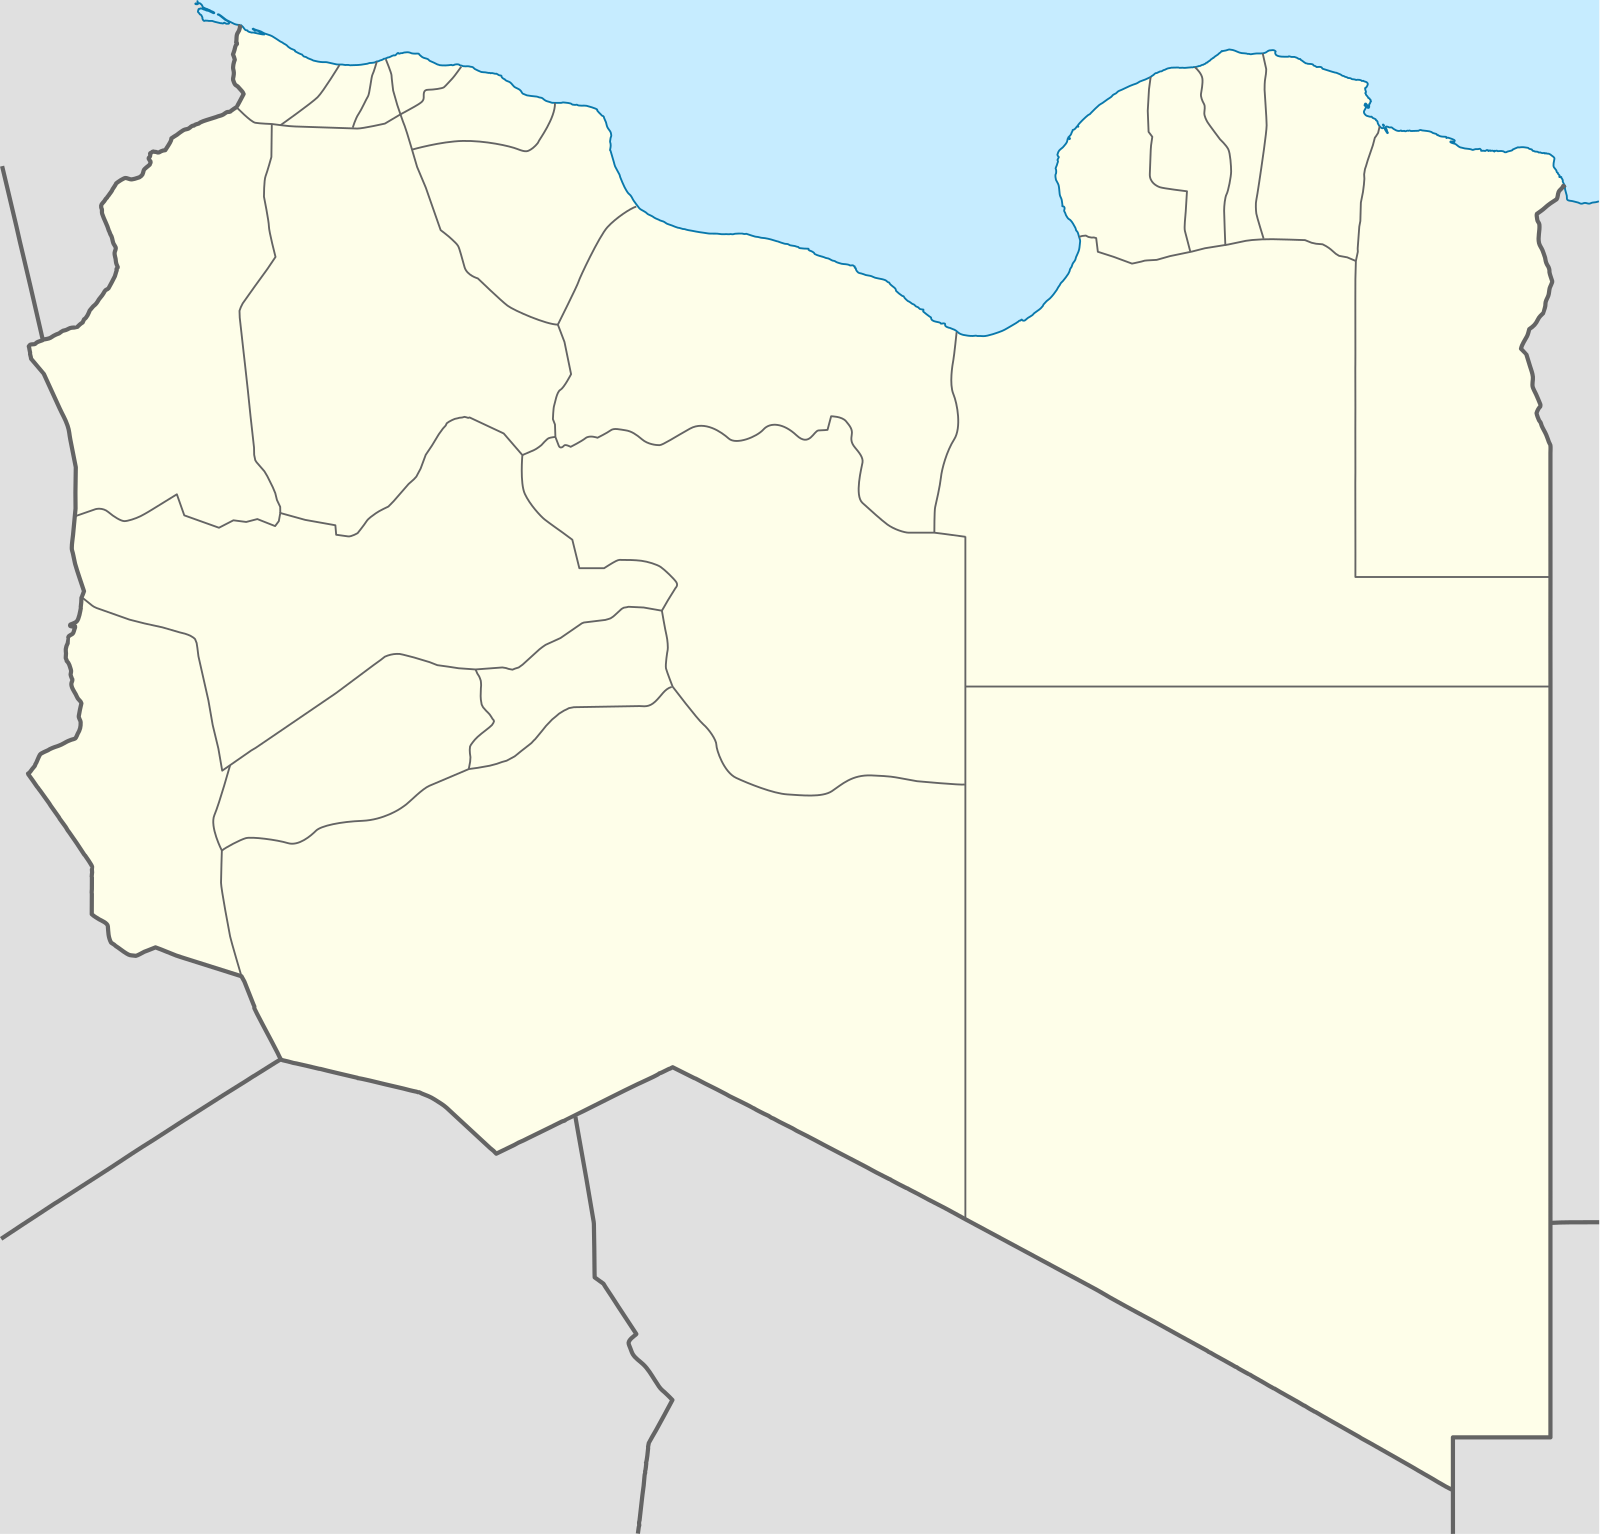 Nspwk/sandbox is located in Libya